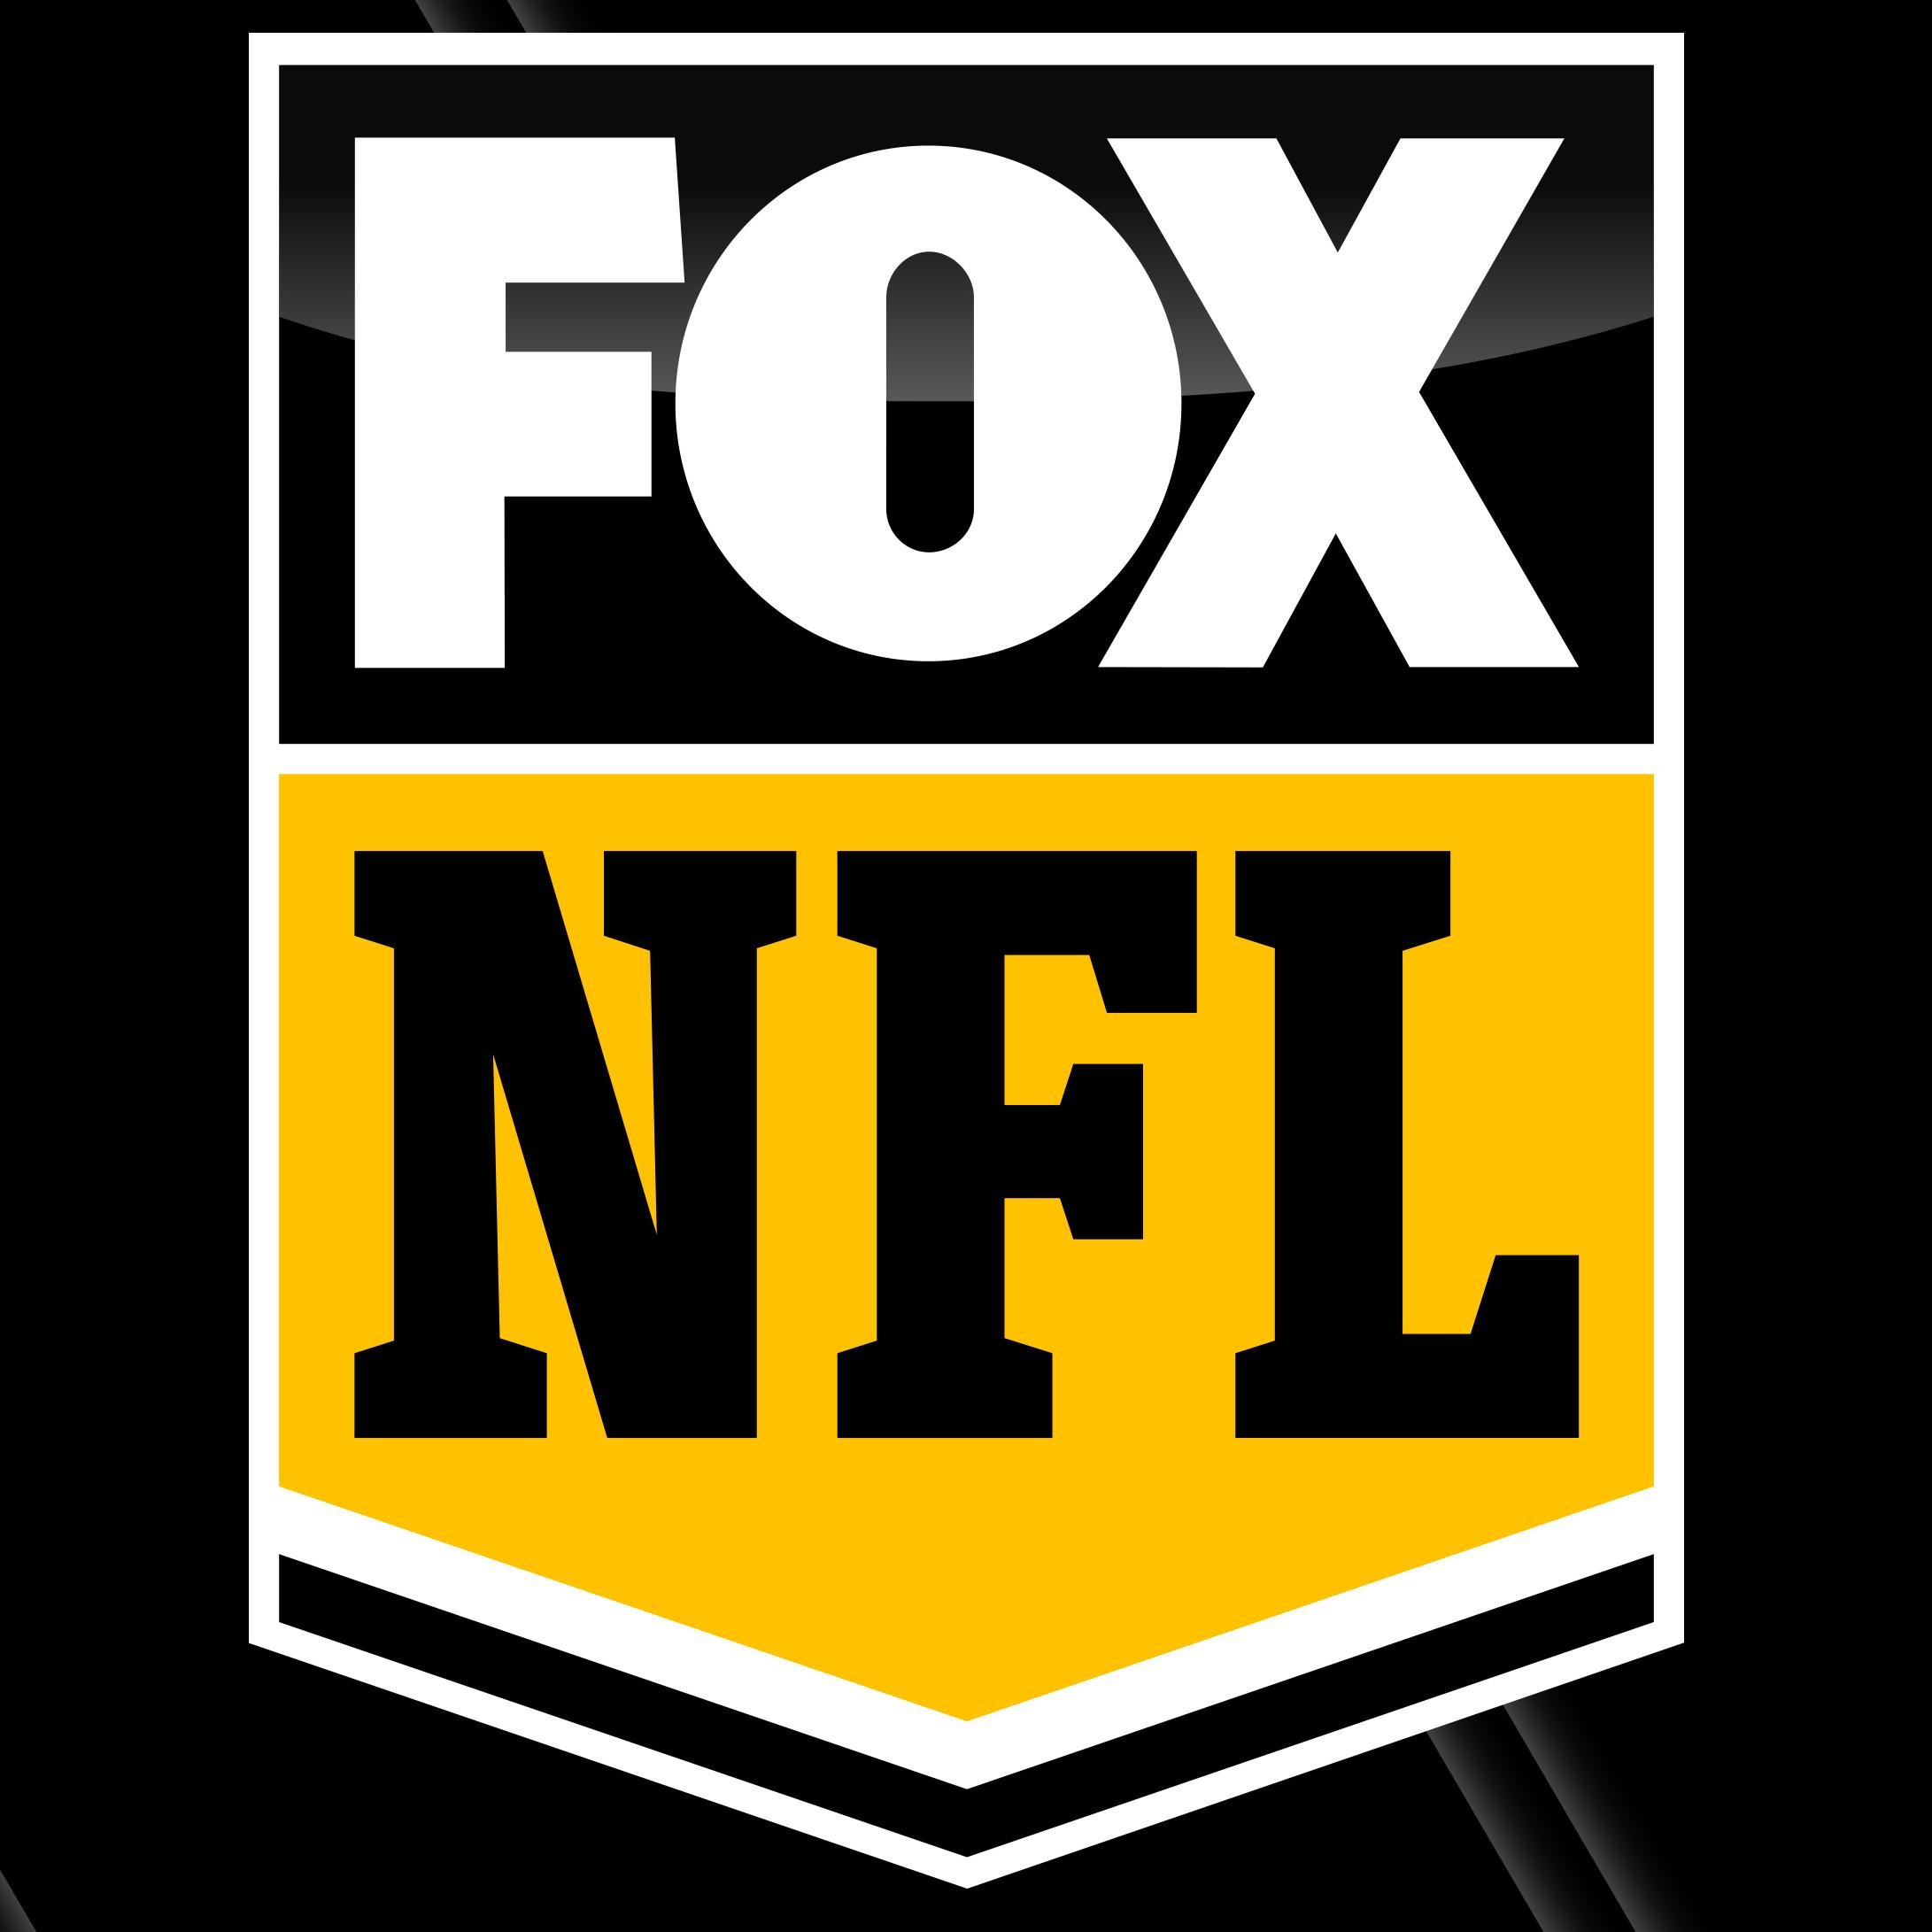 Fox NFL Sunday